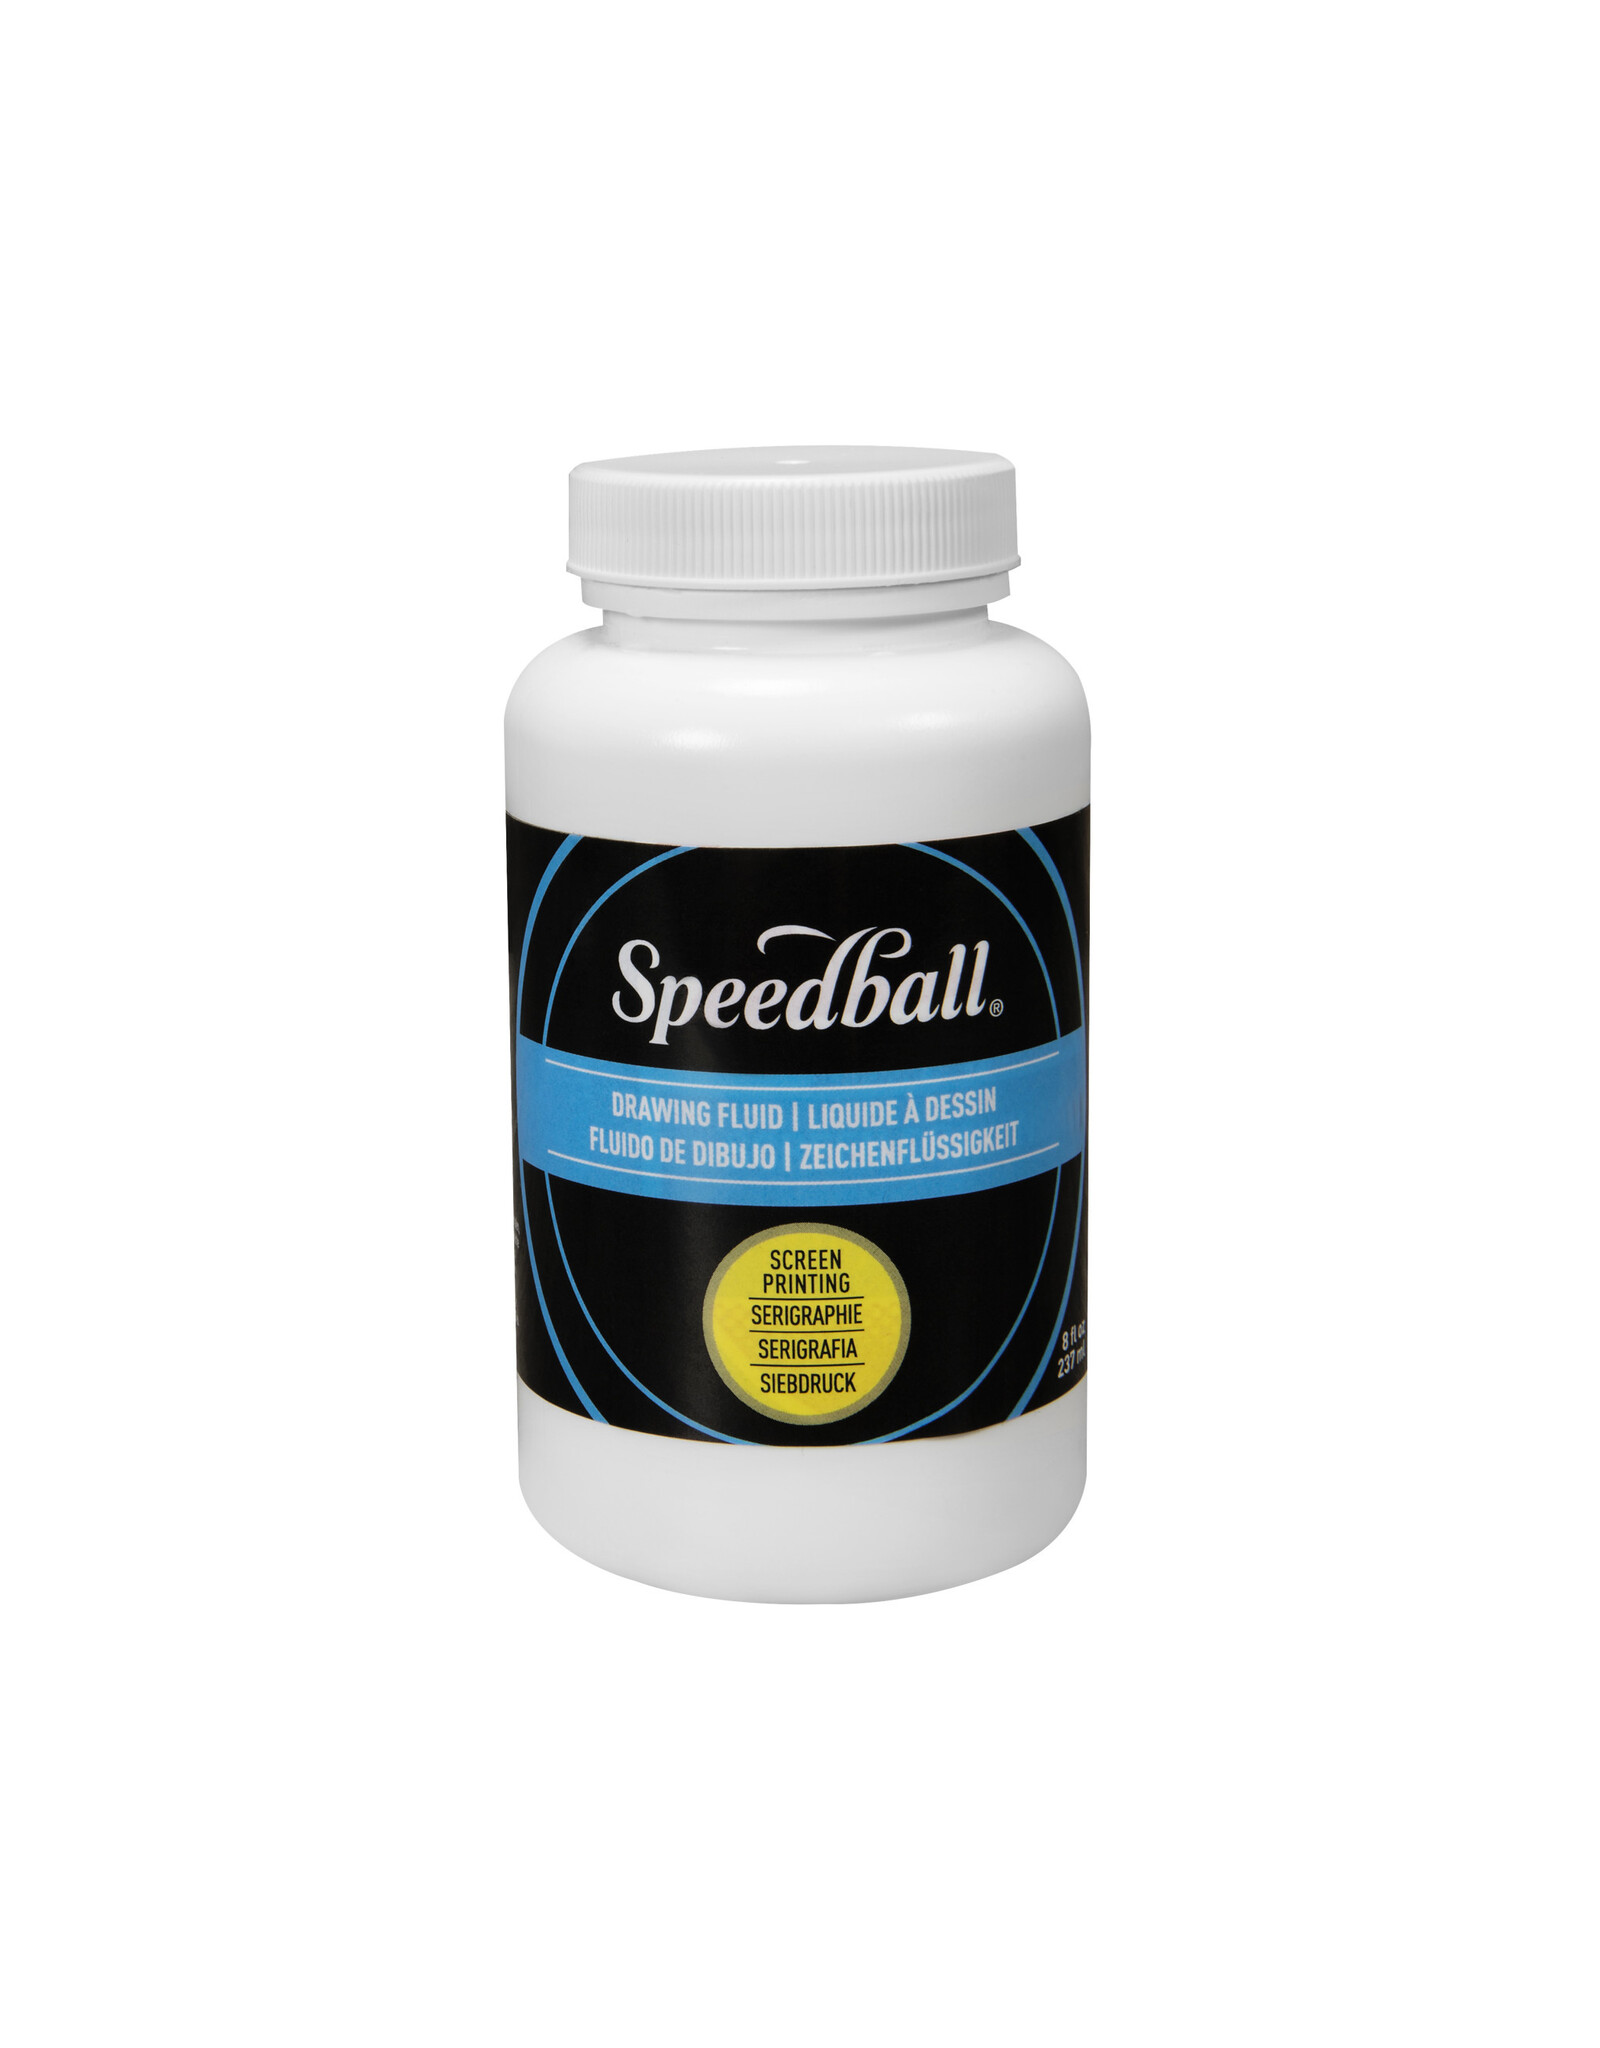 SPEEDBALL ART PRODUCTS Speedball Screen Printing, Screen Drawing Fluid, 8oz